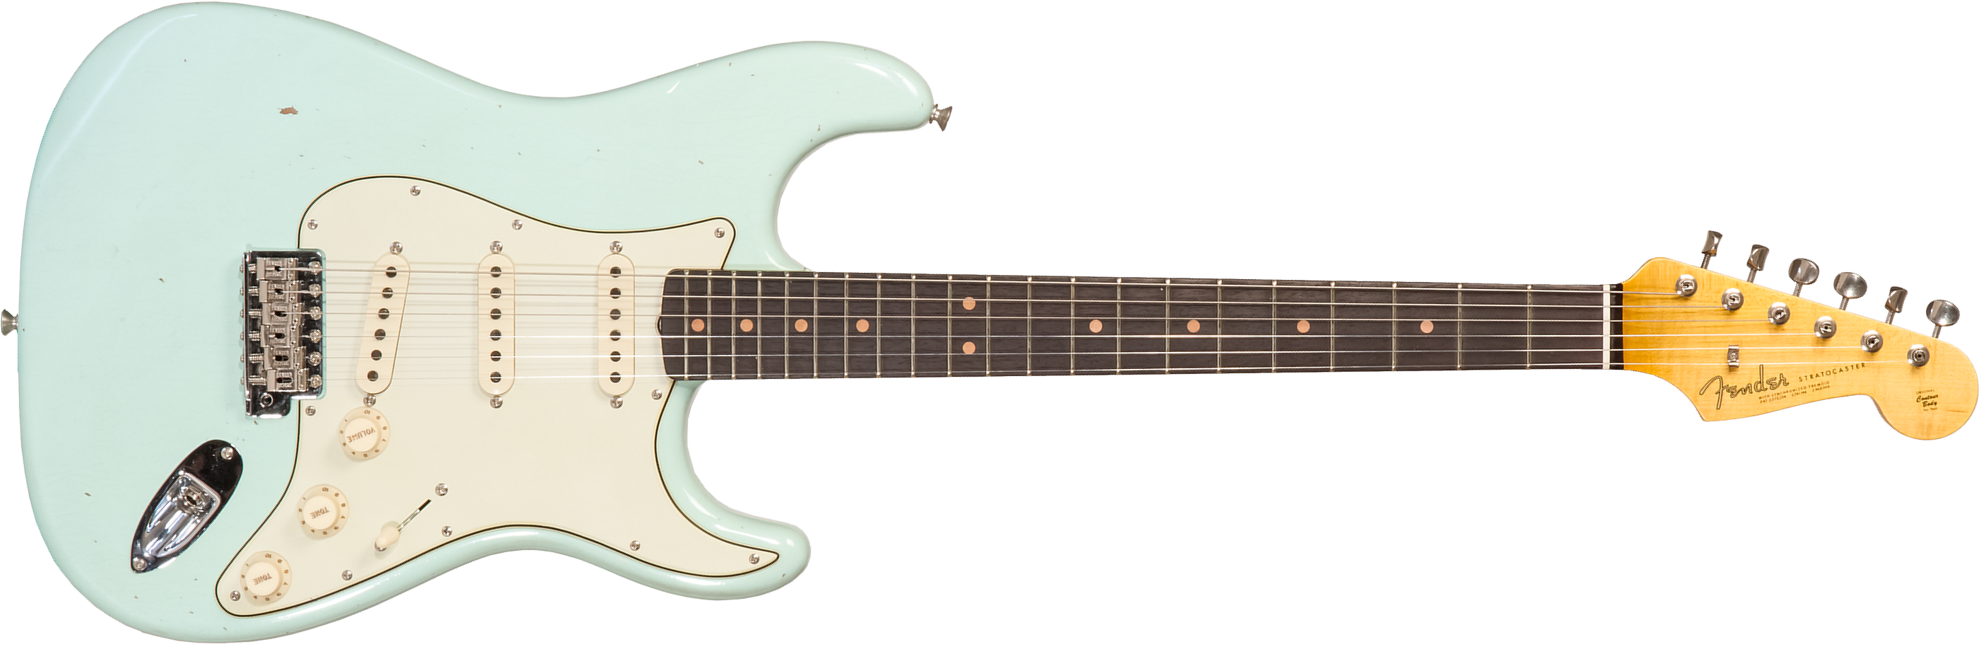 Fender Custom Shop Strat 1964 3s Trem Rw #cz570381 - Journeyman Relic Aged Surf Green - Str shape electric guitar - Main picture